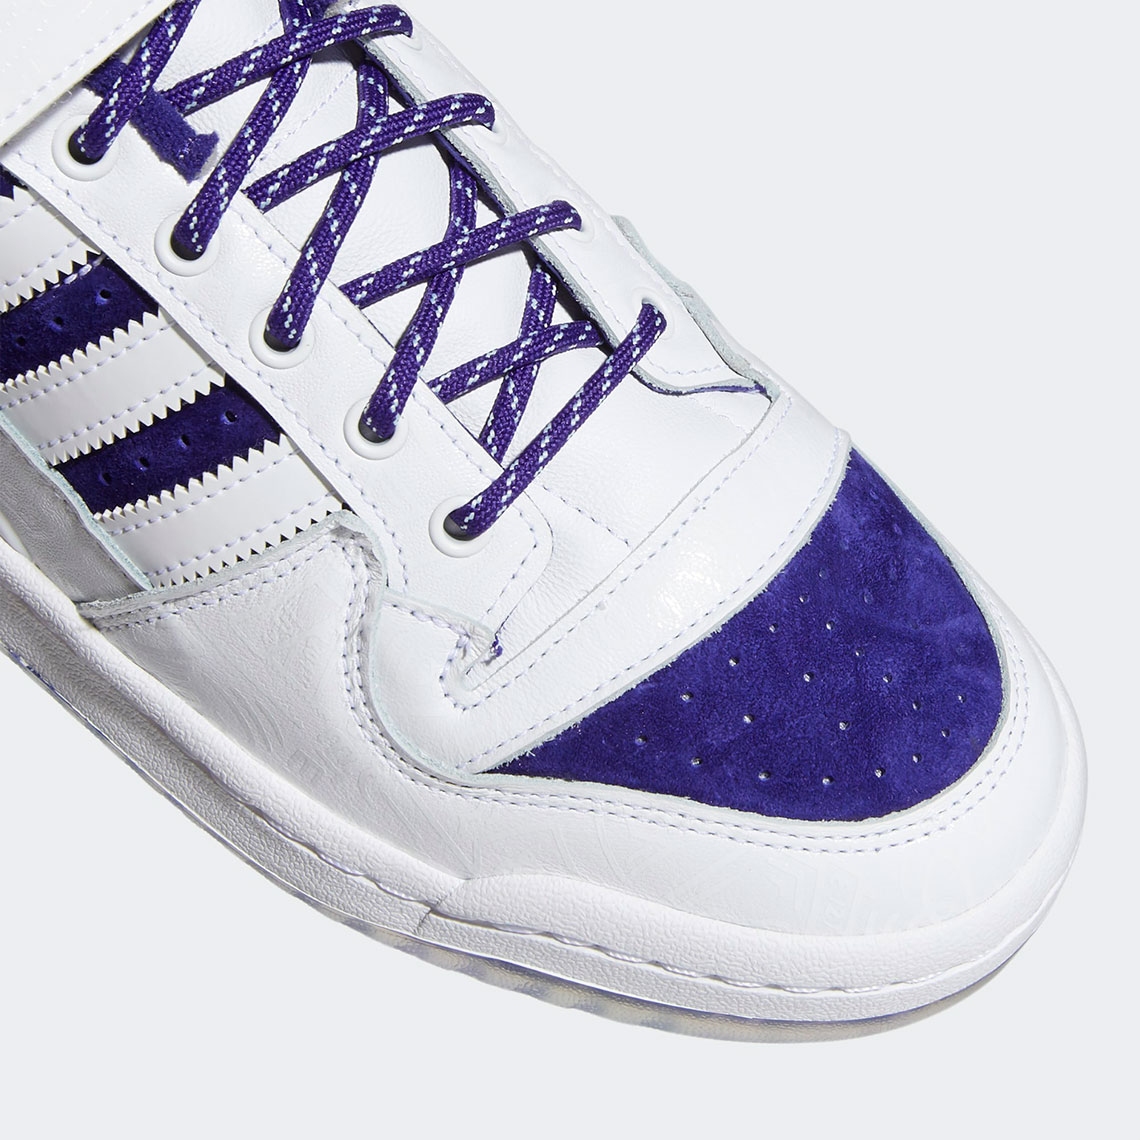 Donovan Mitchells Adidas Forum Low Cloud White Collegiate Purple Halo Mint Gy8287 1